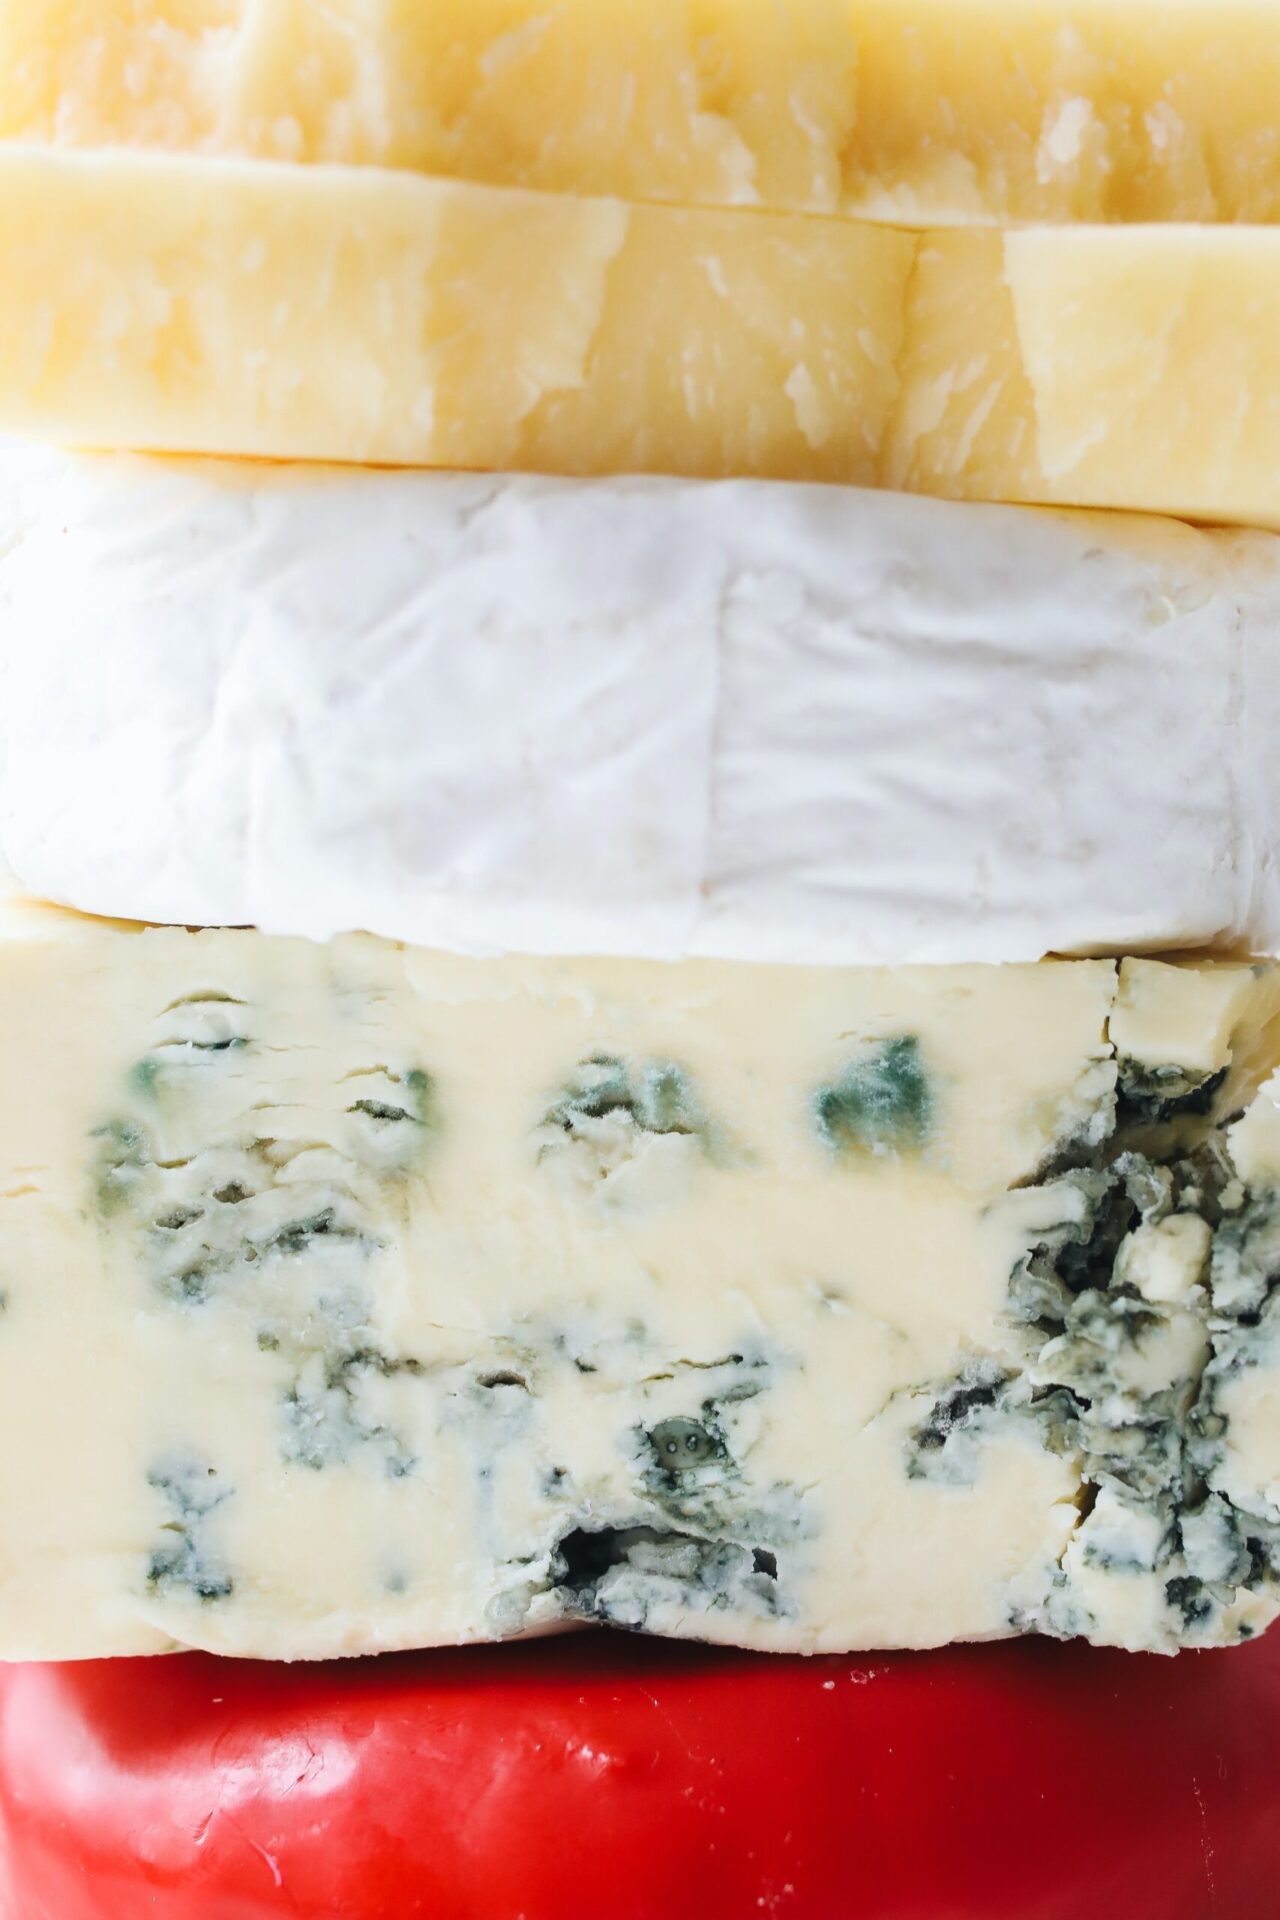 Cheese expert series: 10 most popular british cheeses